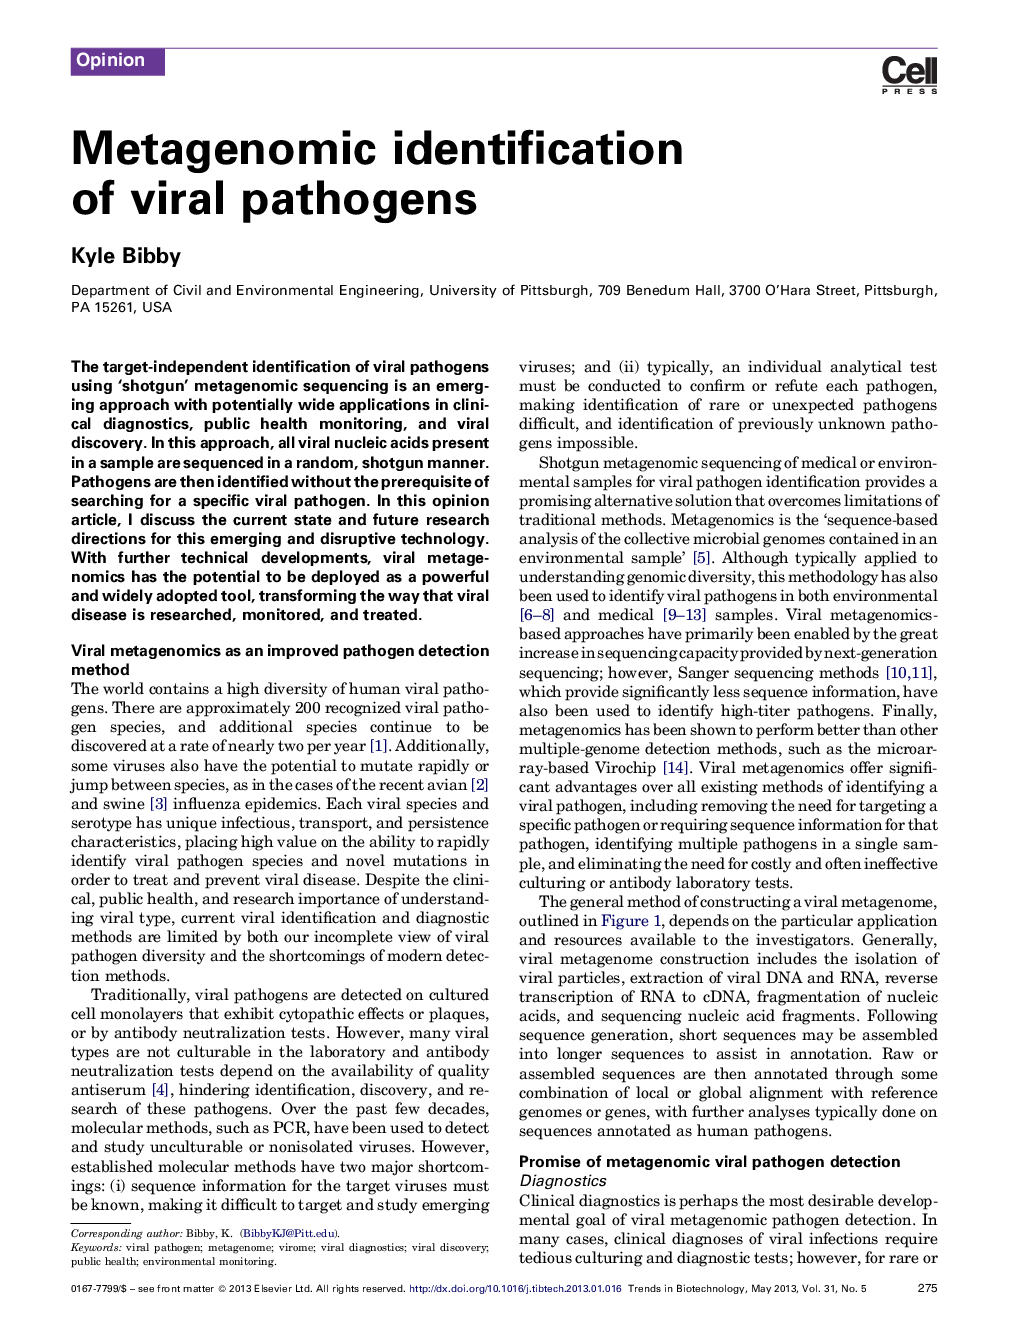 Metagenomic identification of viral pathogens